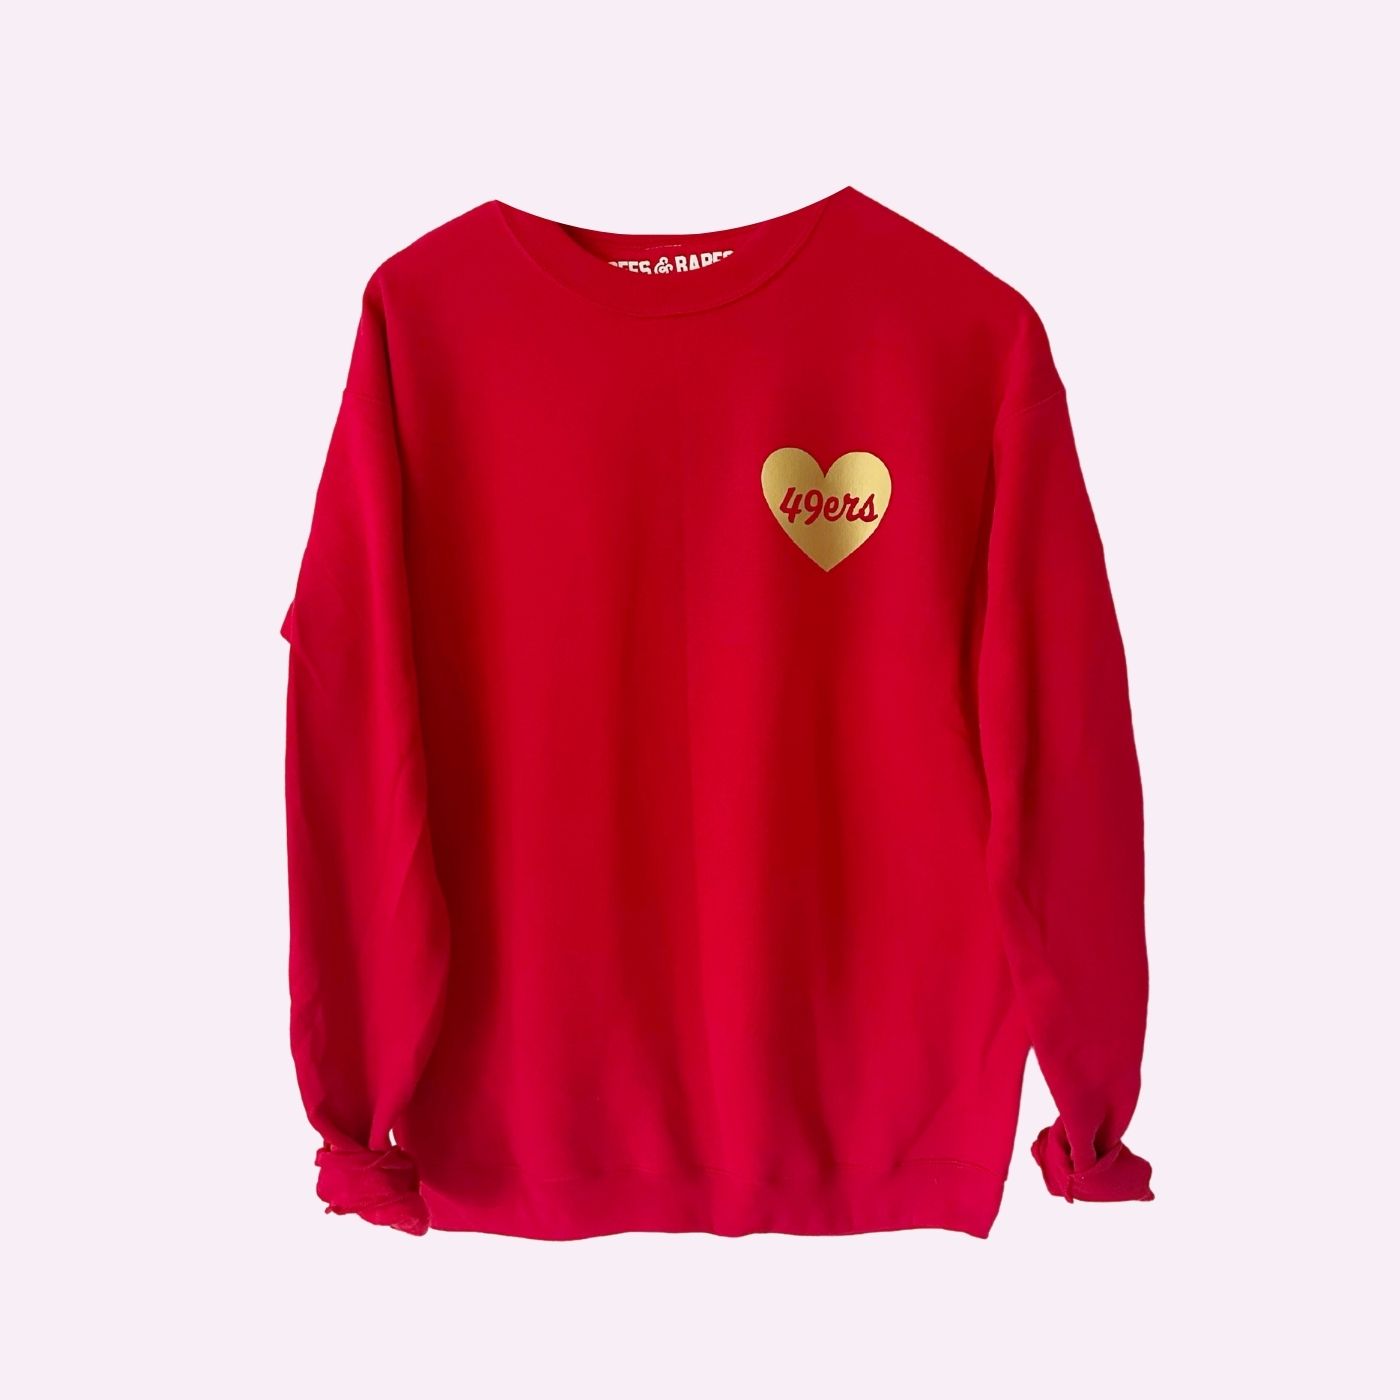 HEART U 49ERS ♡ sweatshirt